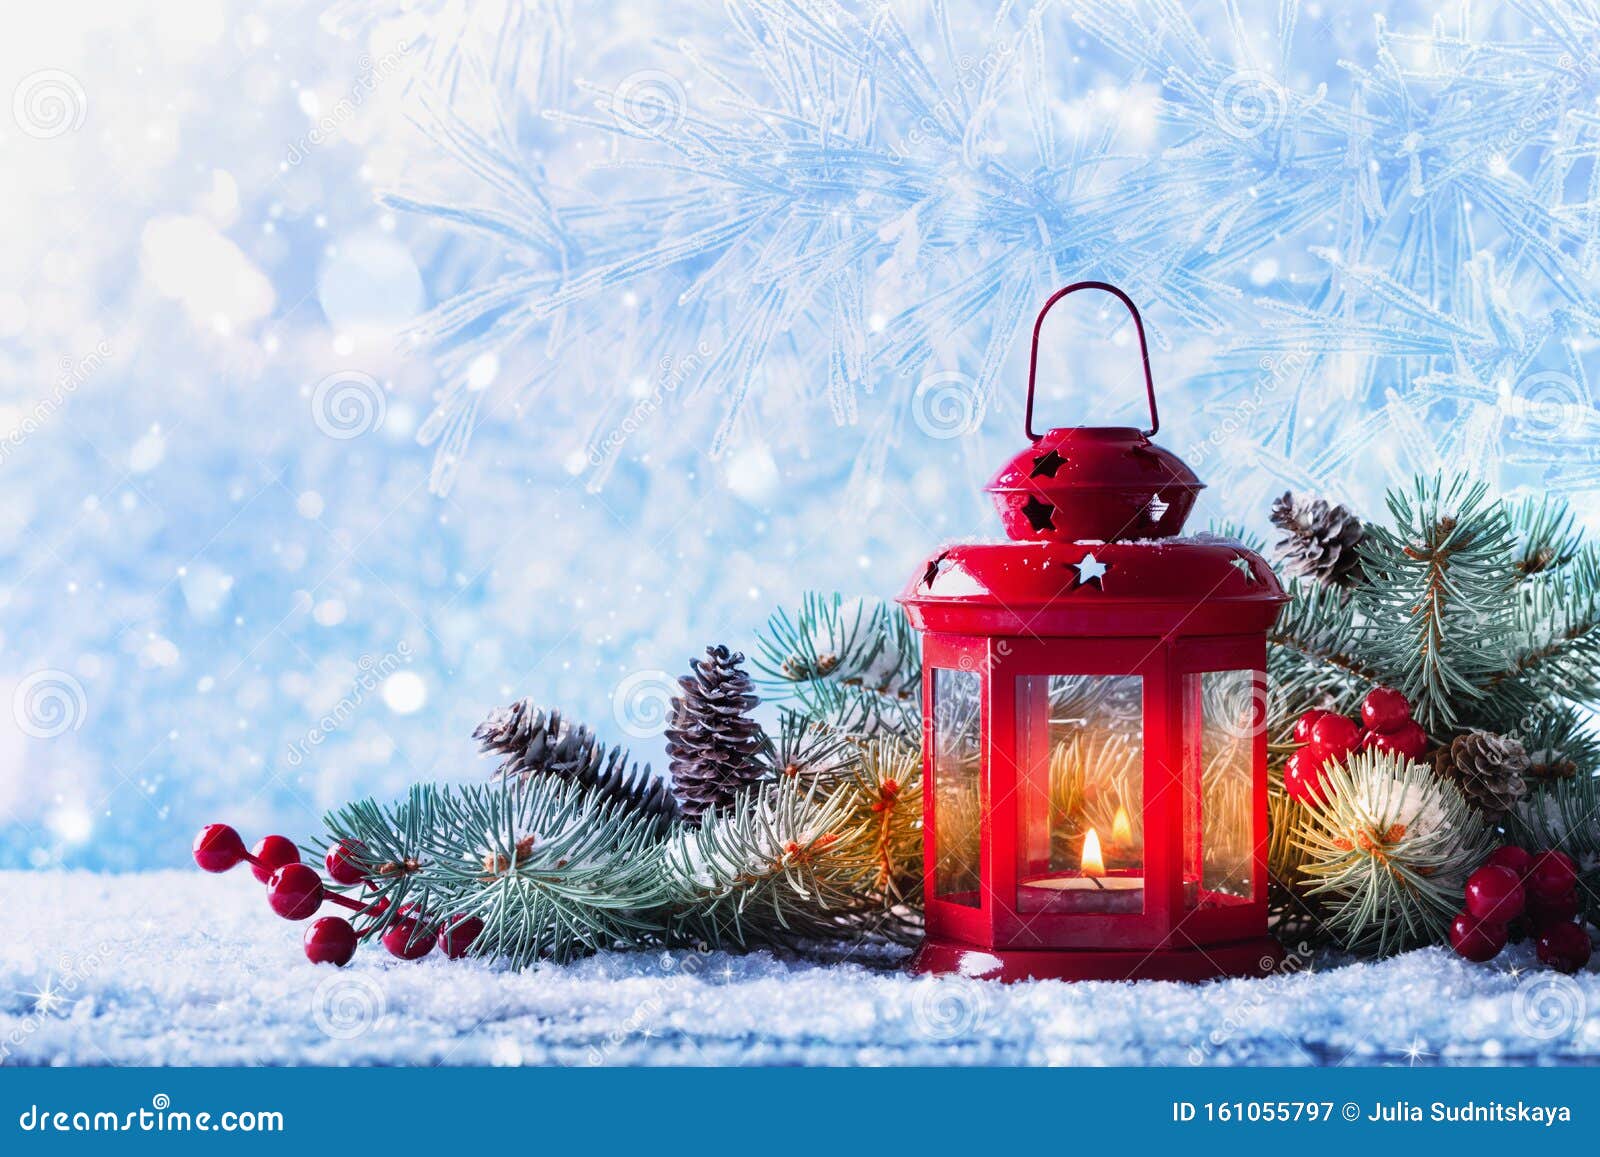 Christmas lantern in snow with fir tree branch. Winter cozy scene